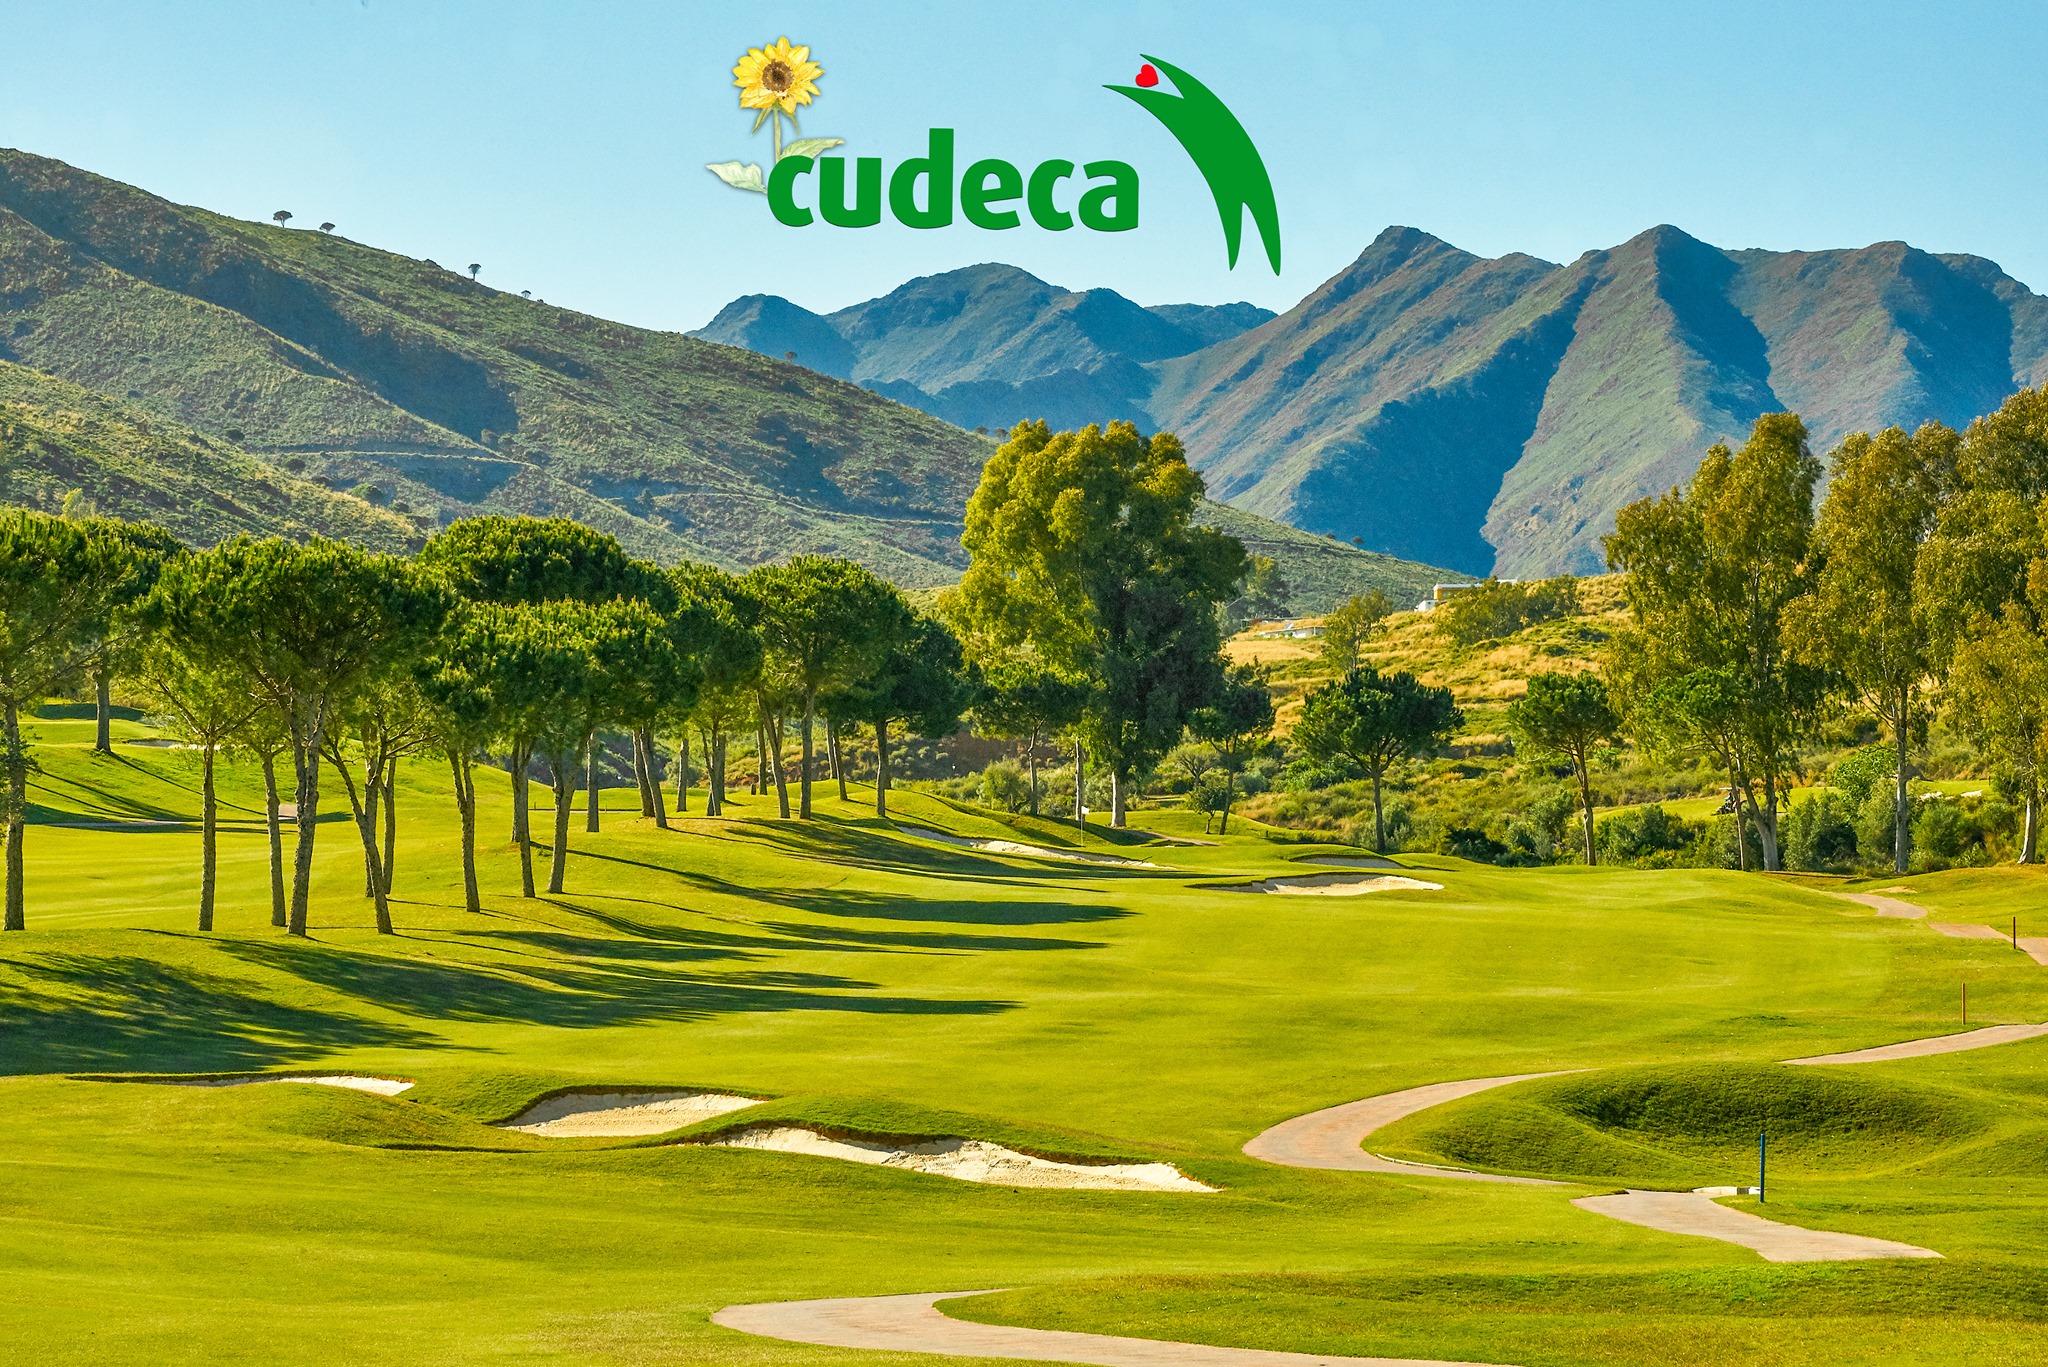 XVII Cudeca Cup Golf Tournament at La Cala Golf